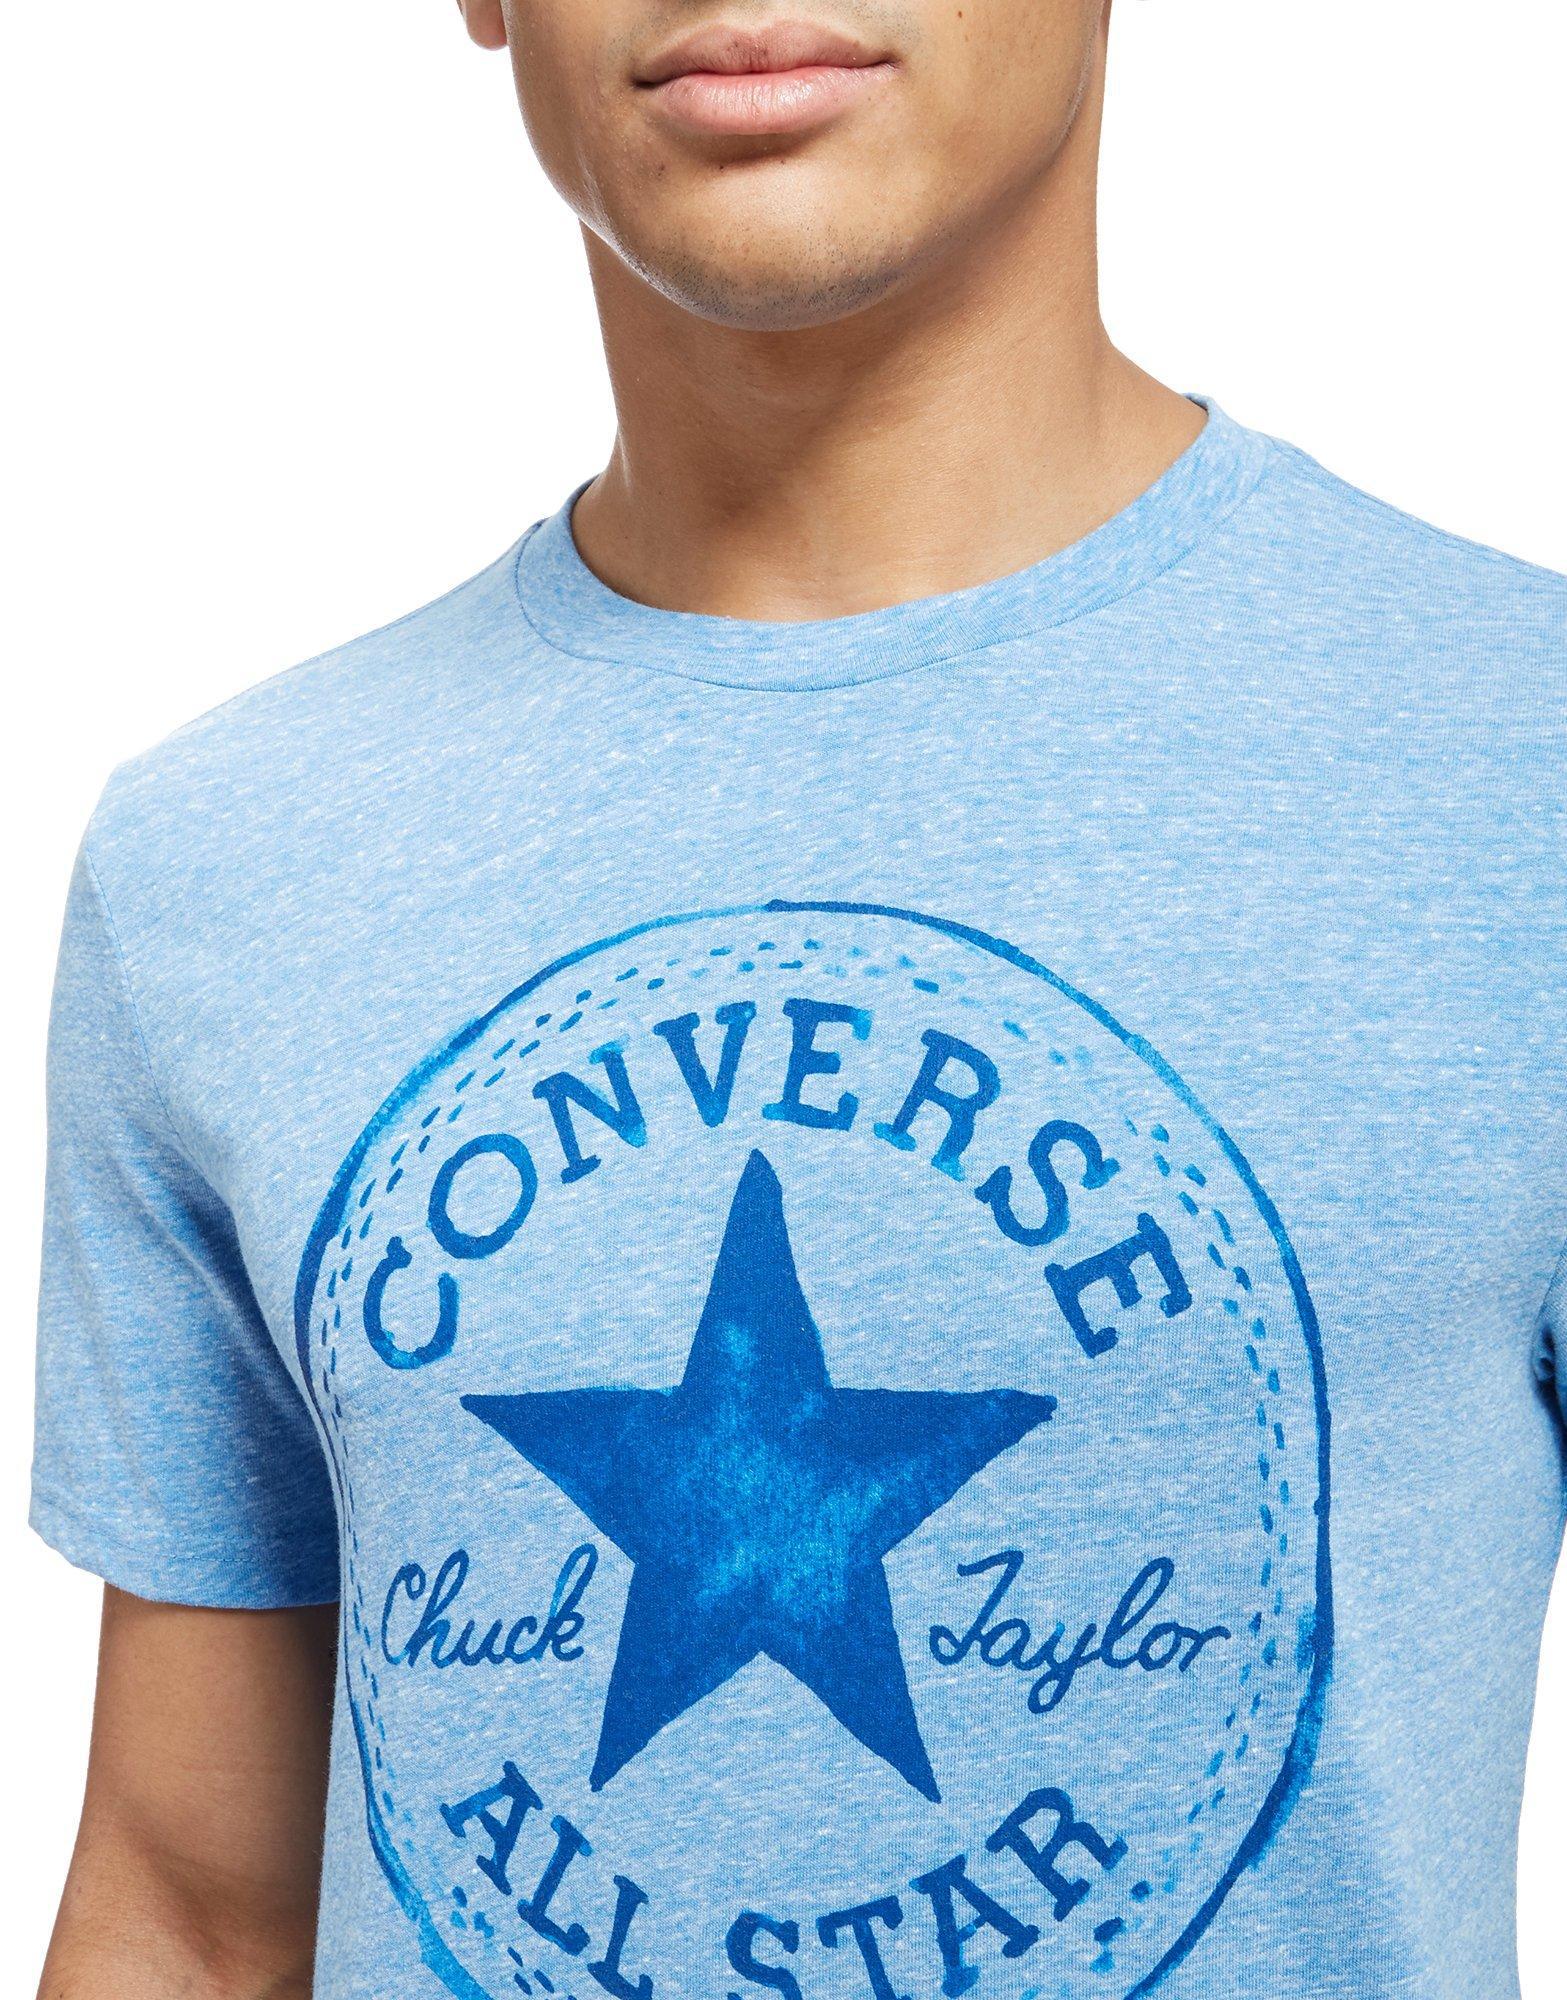 converse chuck taylor patch t shirt